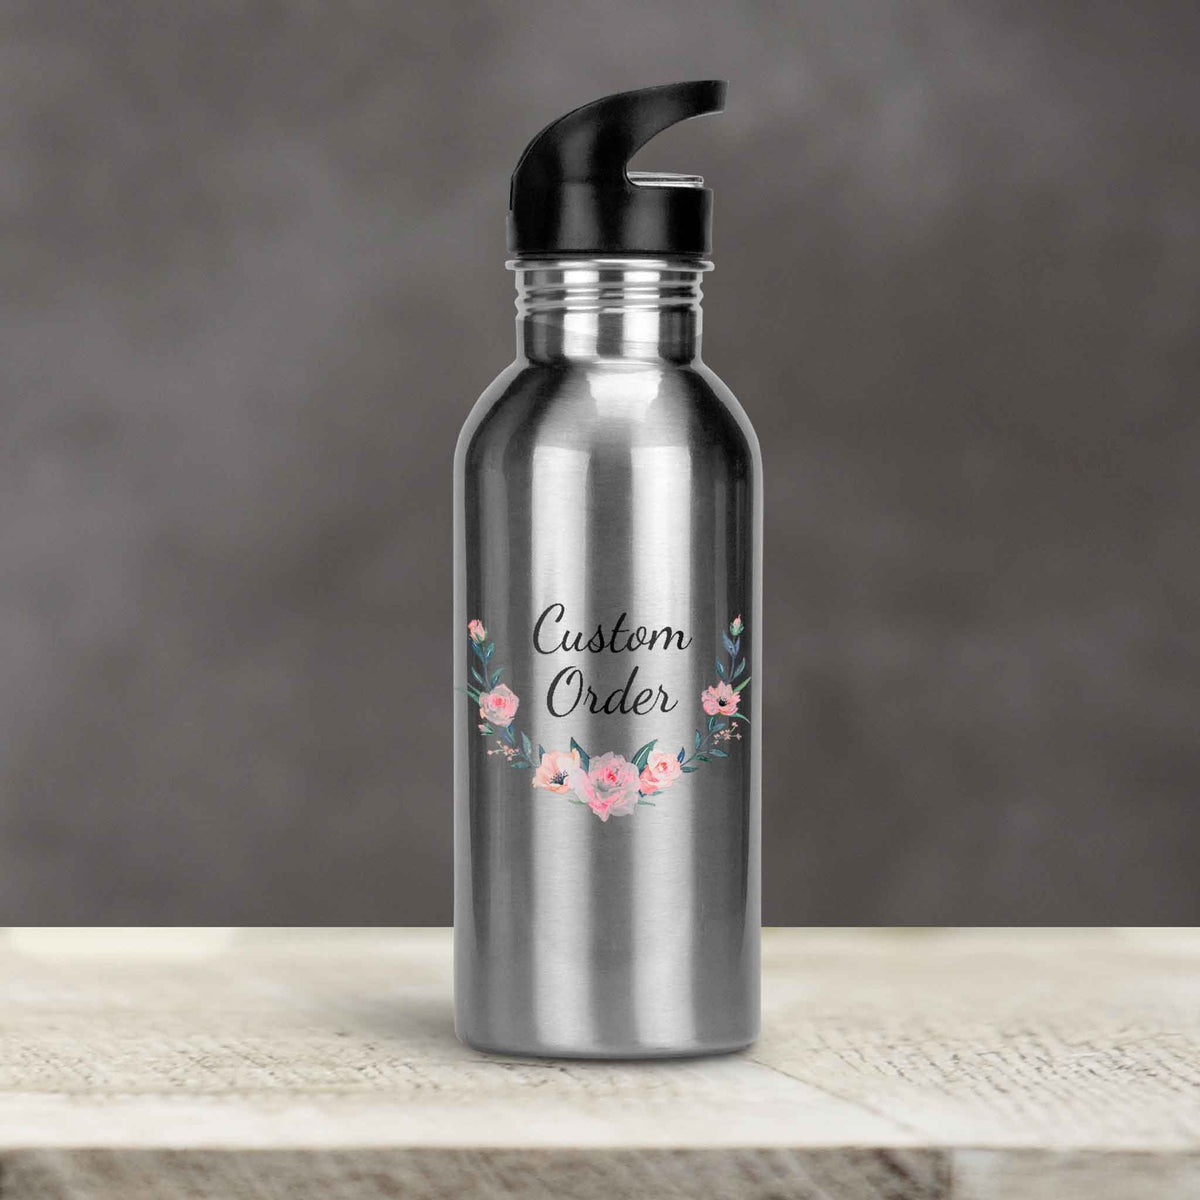 Personalized Water Bottles | Custom Stainless Steel Water Bottles | 30oz | Custom Order